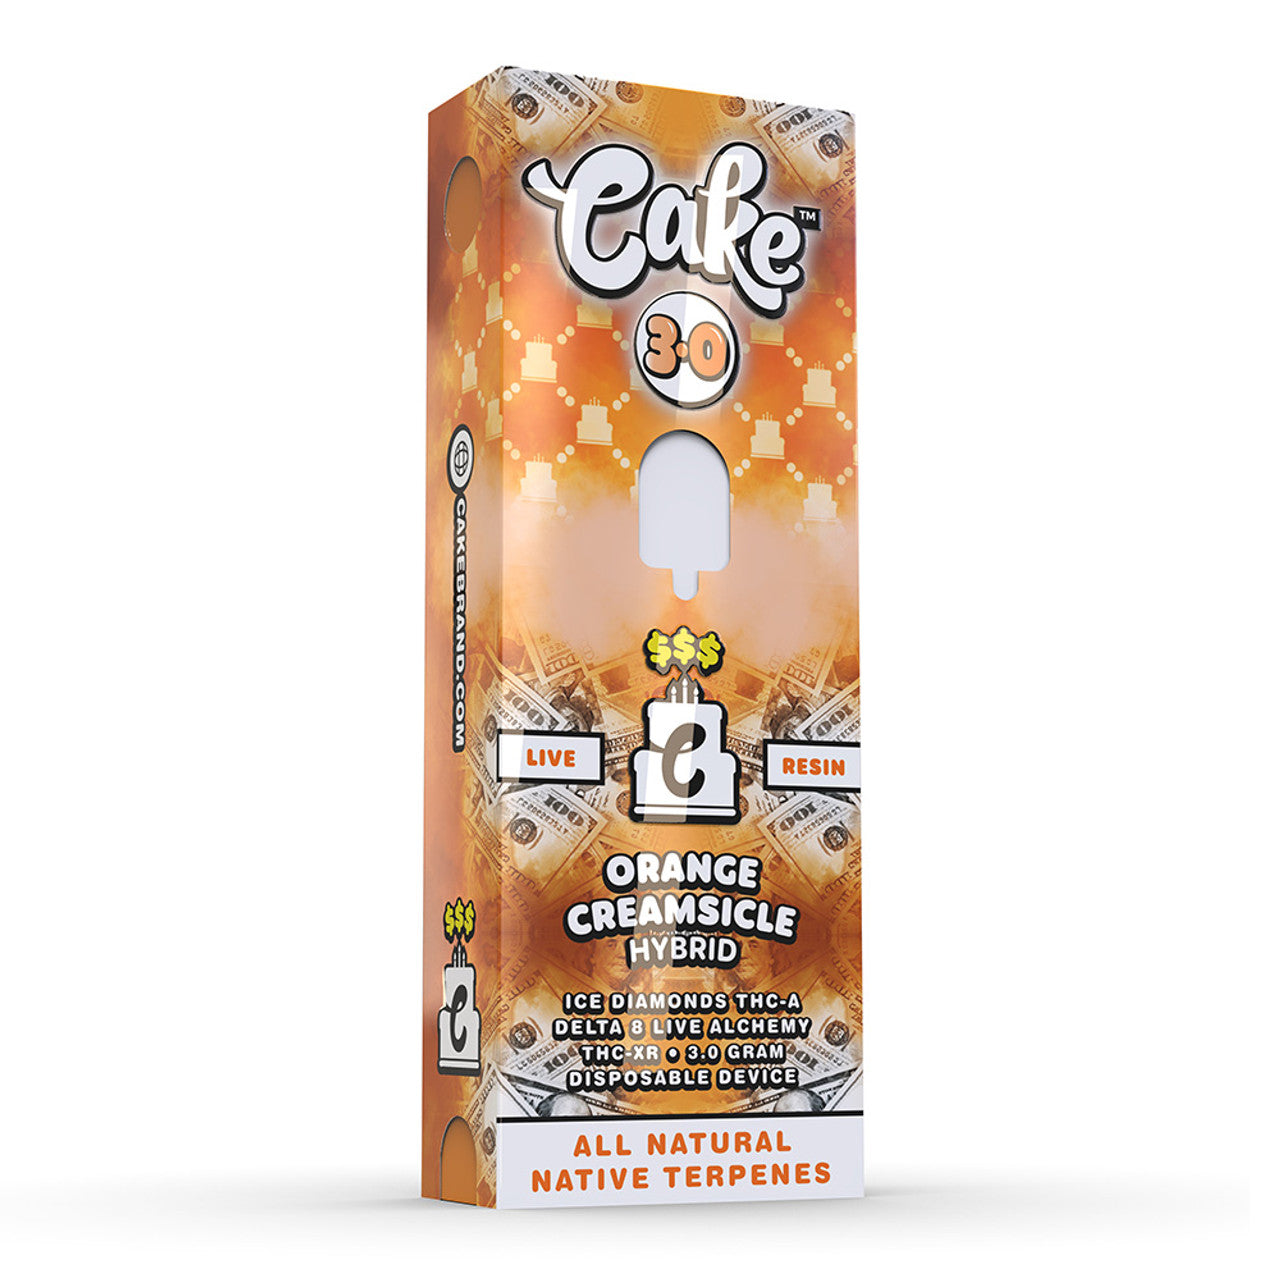 CAKE 3.0 Money Line Live Resin Ice Diamonds THC-A + Delta 8 Live Alchemy + THC-XR Disposable 3G - Orange Creamsicle (Hybrid)